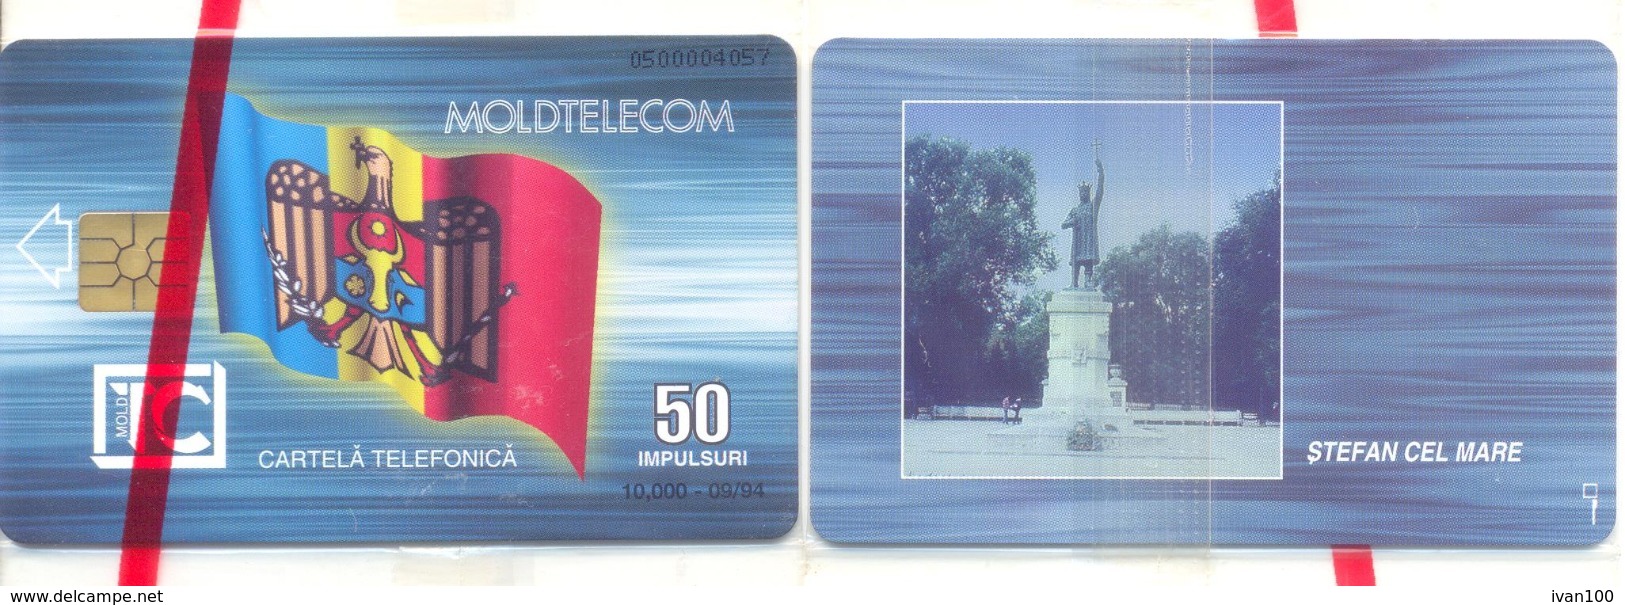 1994. Moldova - CHIP - 50 IMP, 09/1994, RR BLISTER - Moldawien (Moldau)